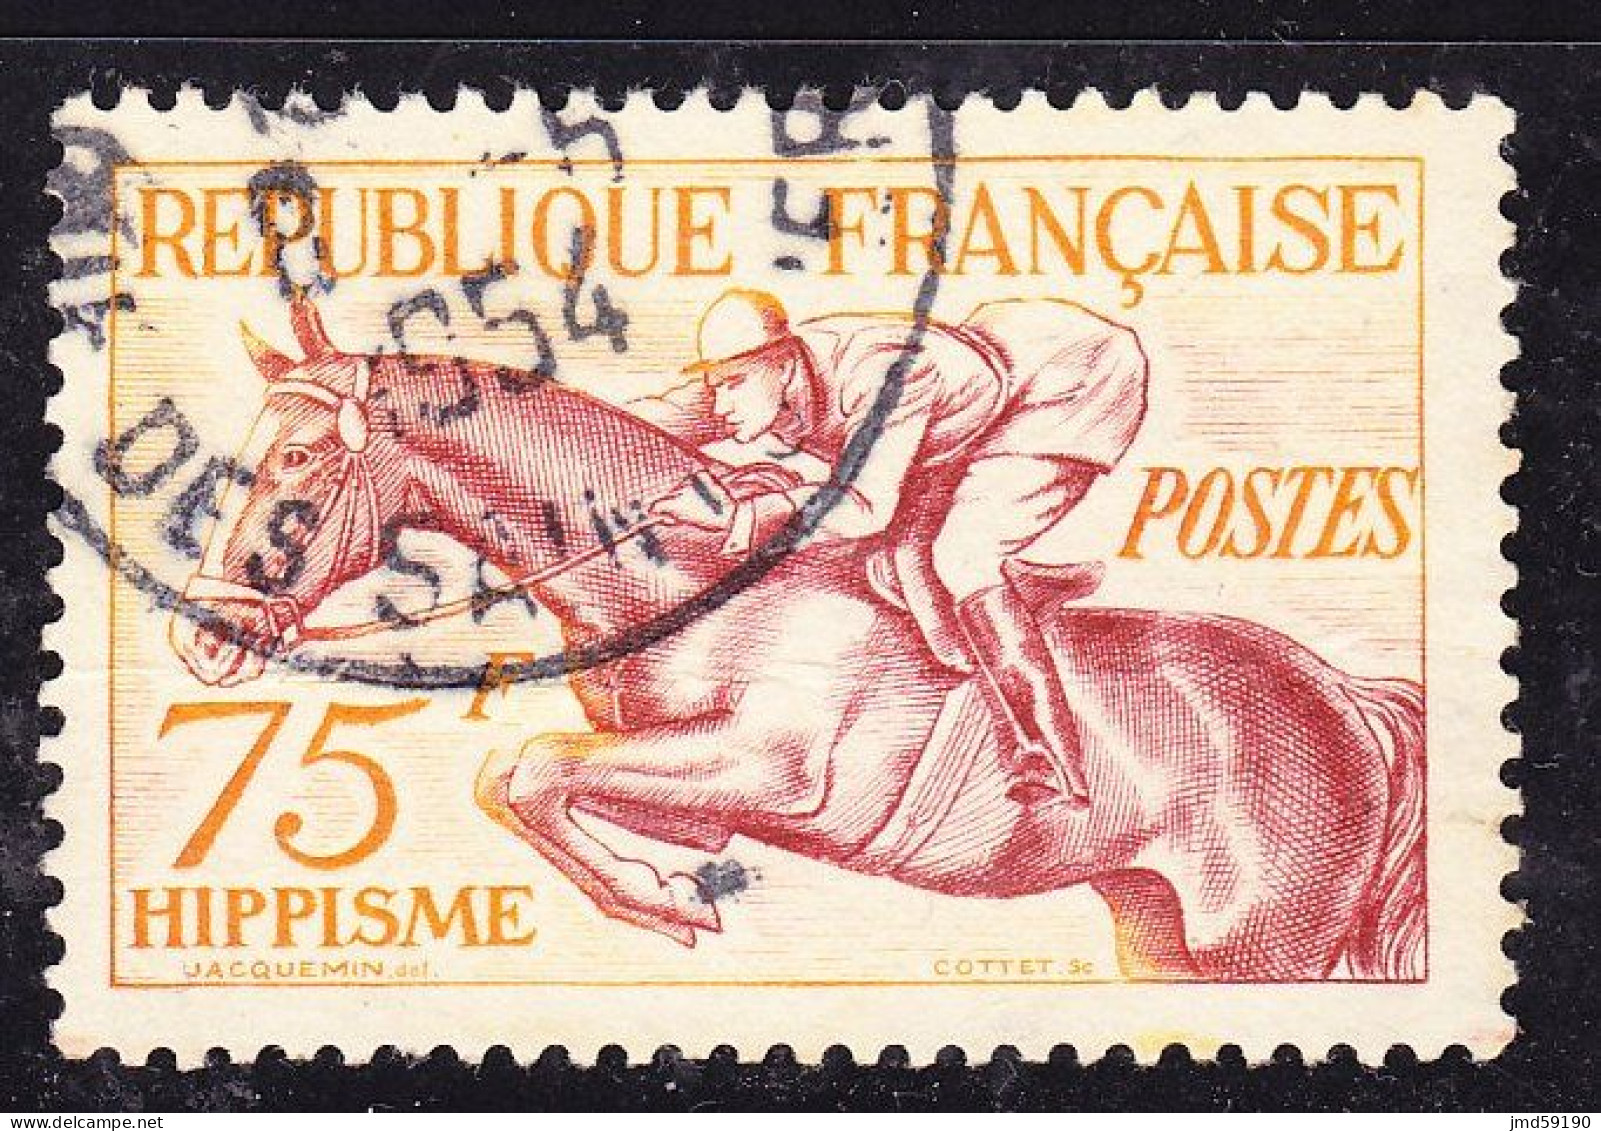 FRANCE Timbre Oblitéré N° 965 - Jeux Olympiques D'HELSINKI 1952 - 75Fr Hippisme - Usati